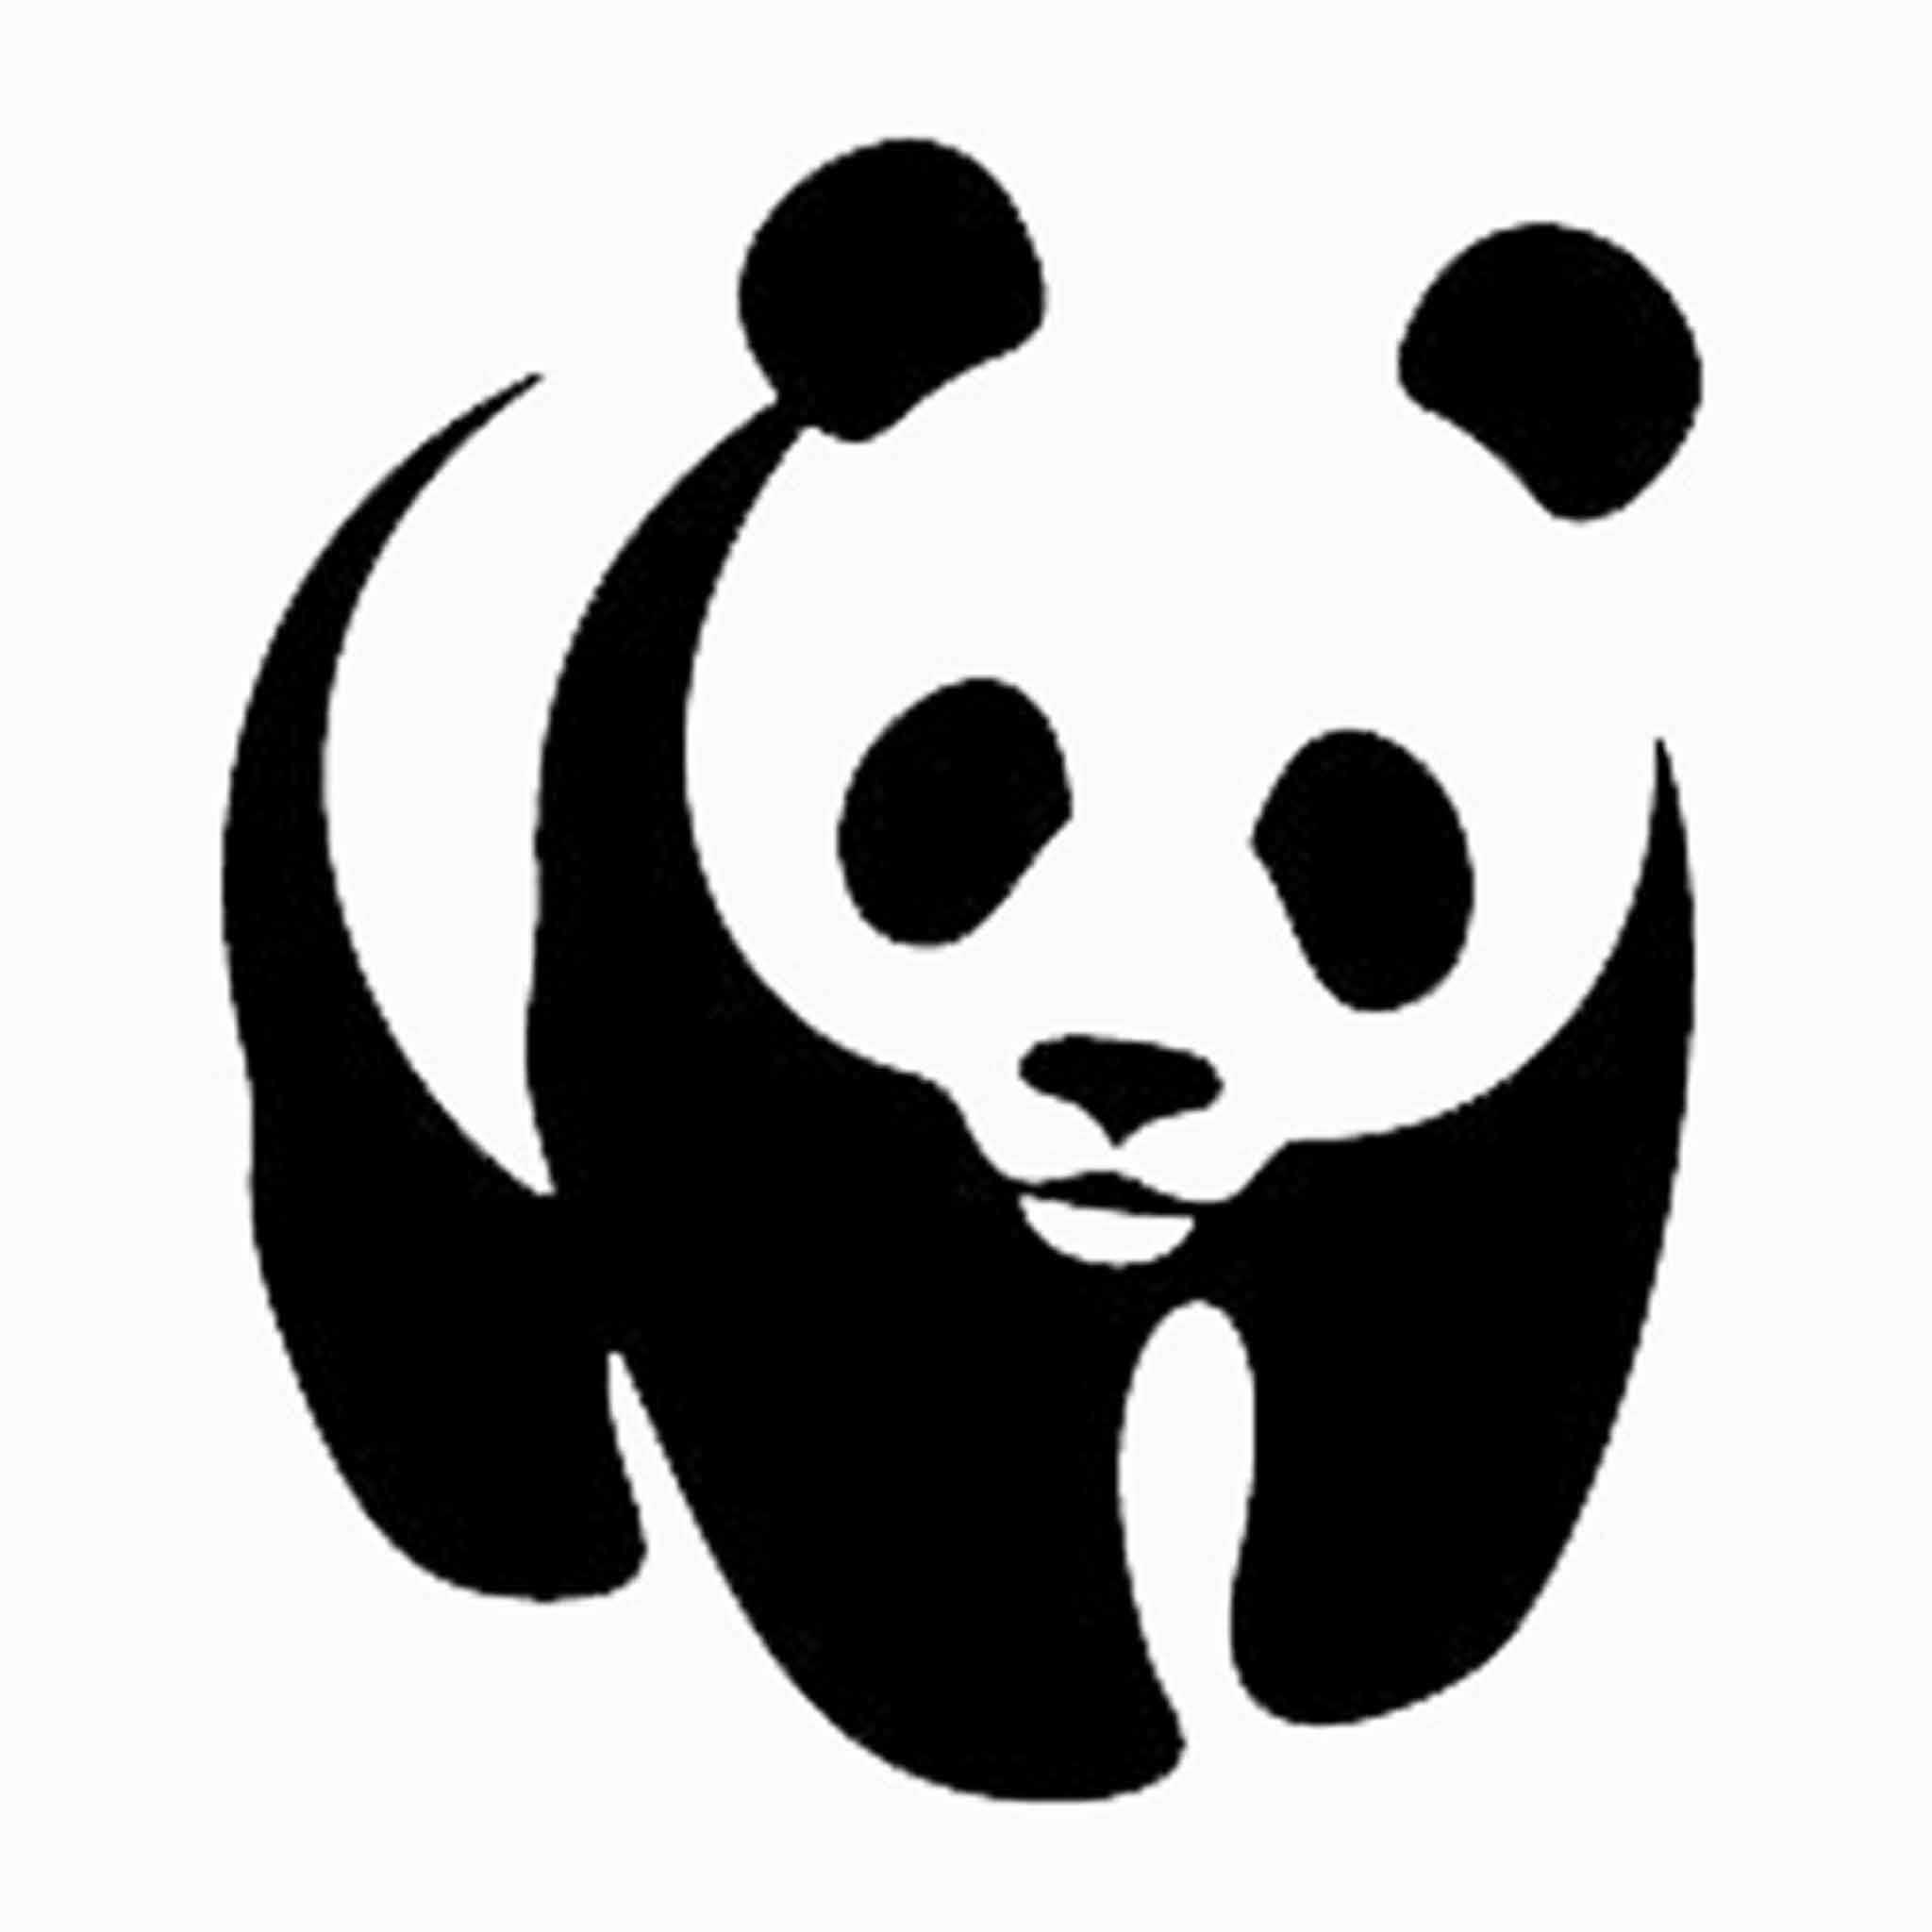 WWF panda logo in original resolution